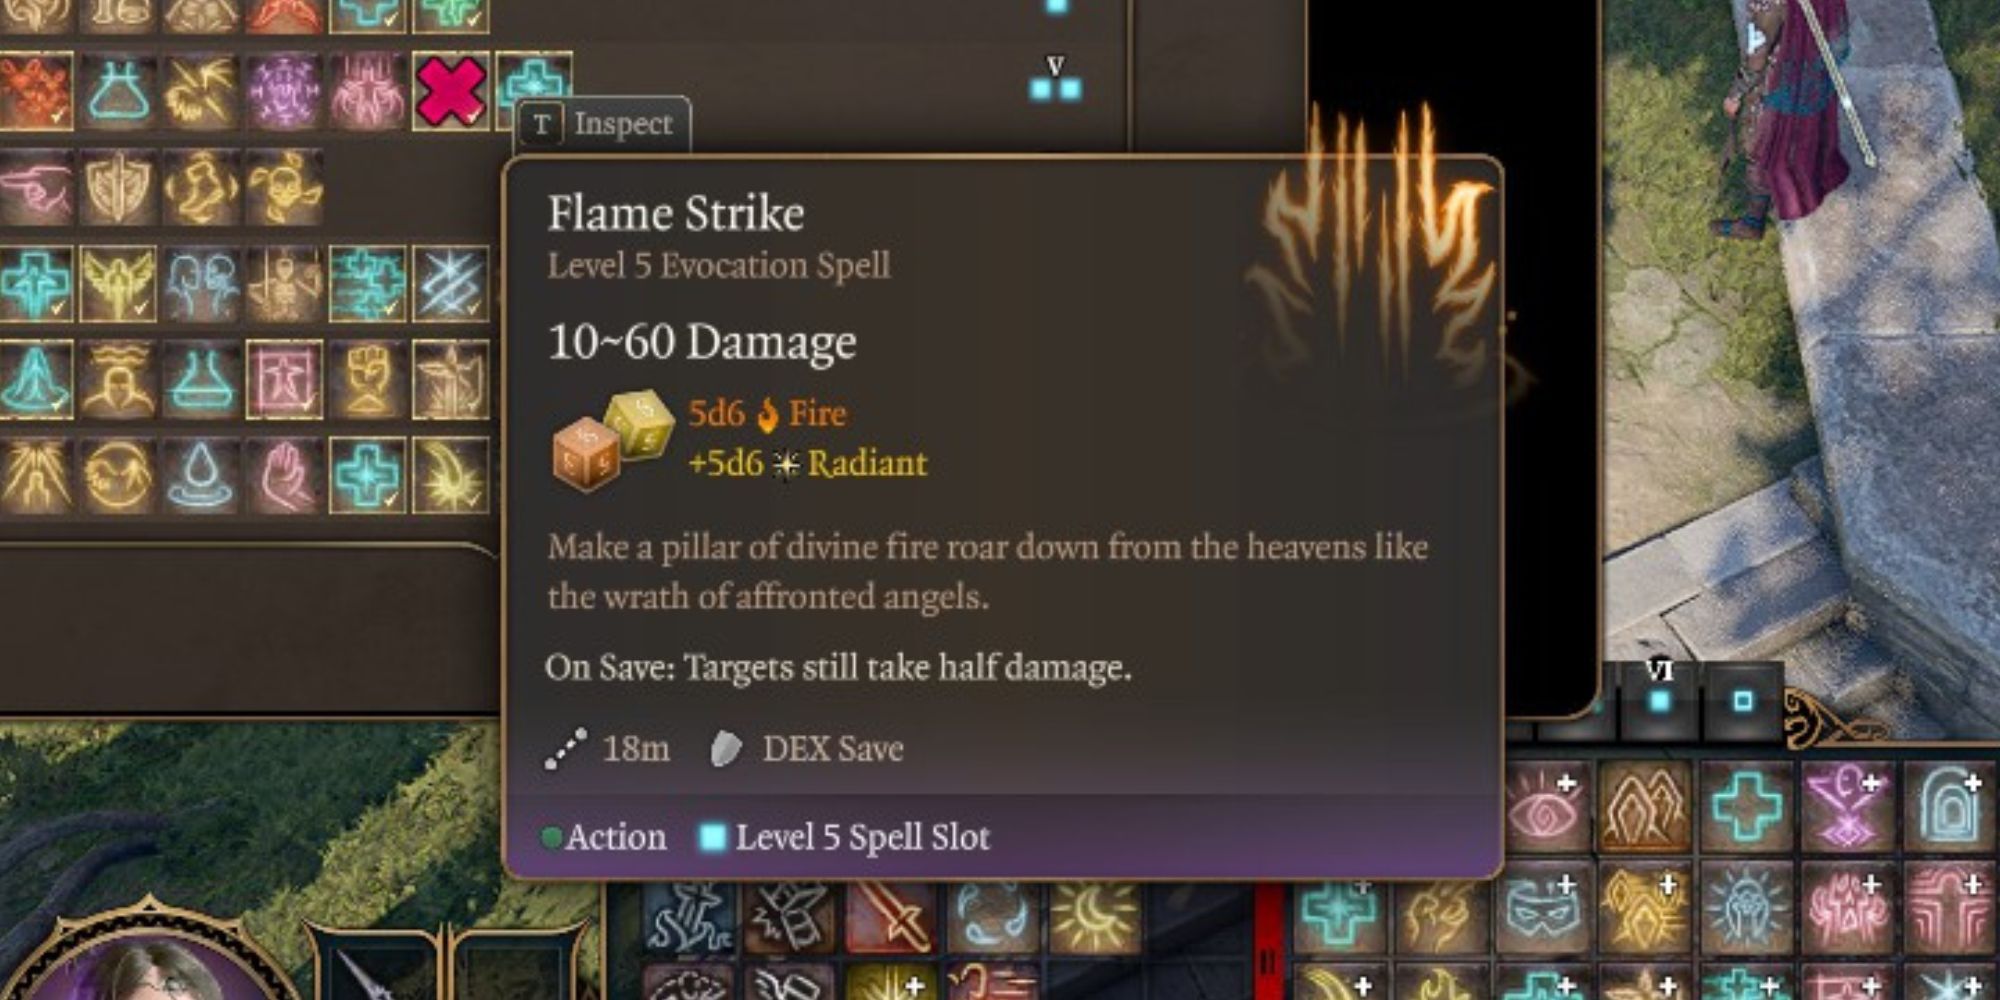 The Flame Strike spell in Baldur's Gate 3